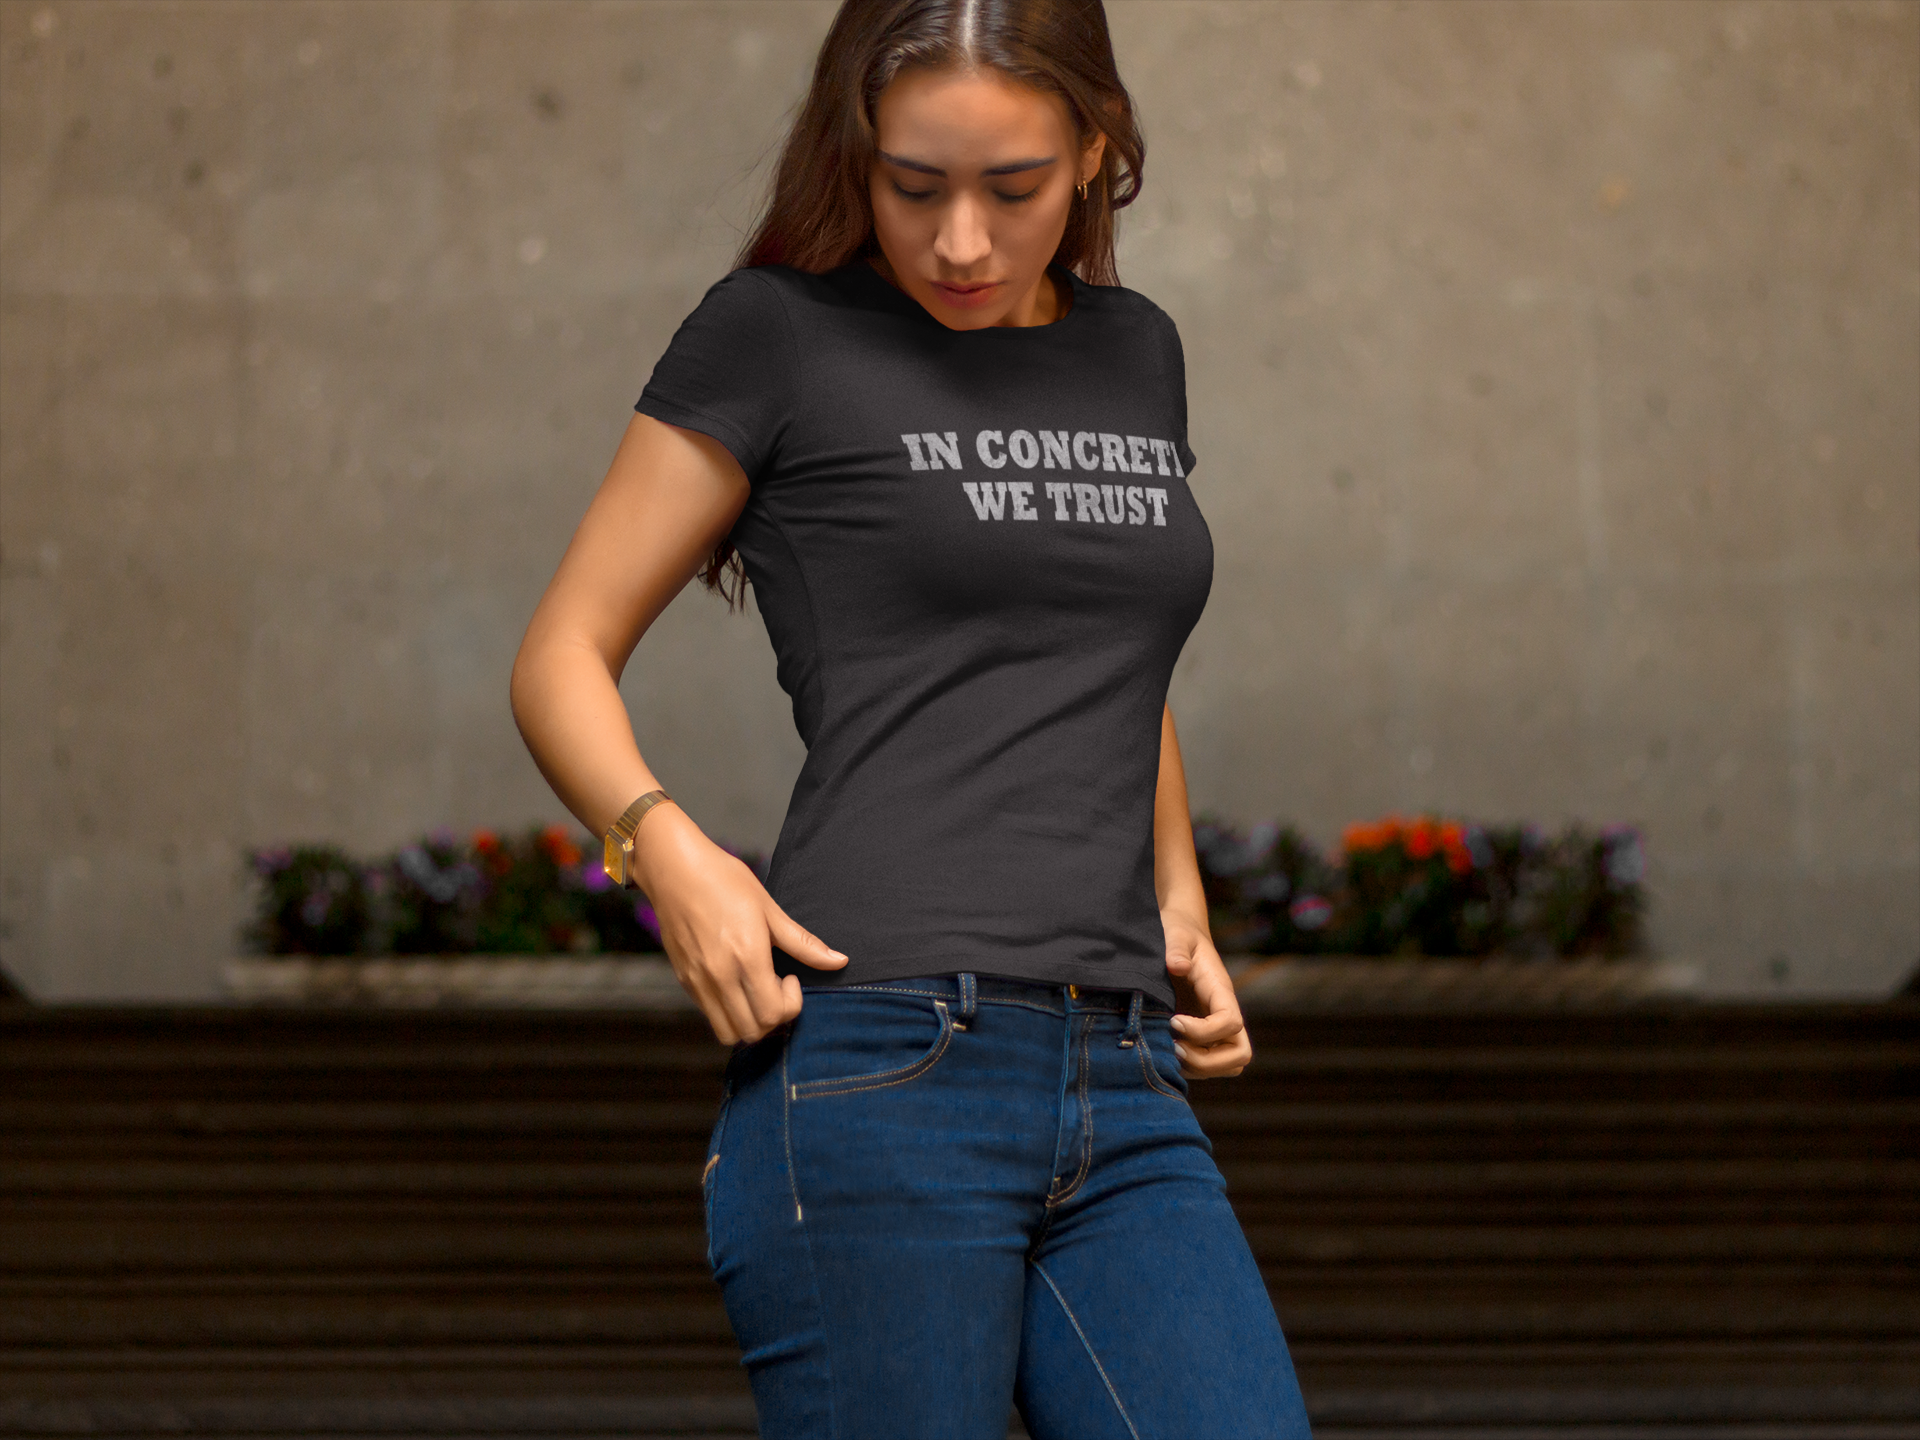 "IN CONCRETE WE TRUST" - Shirt Woman